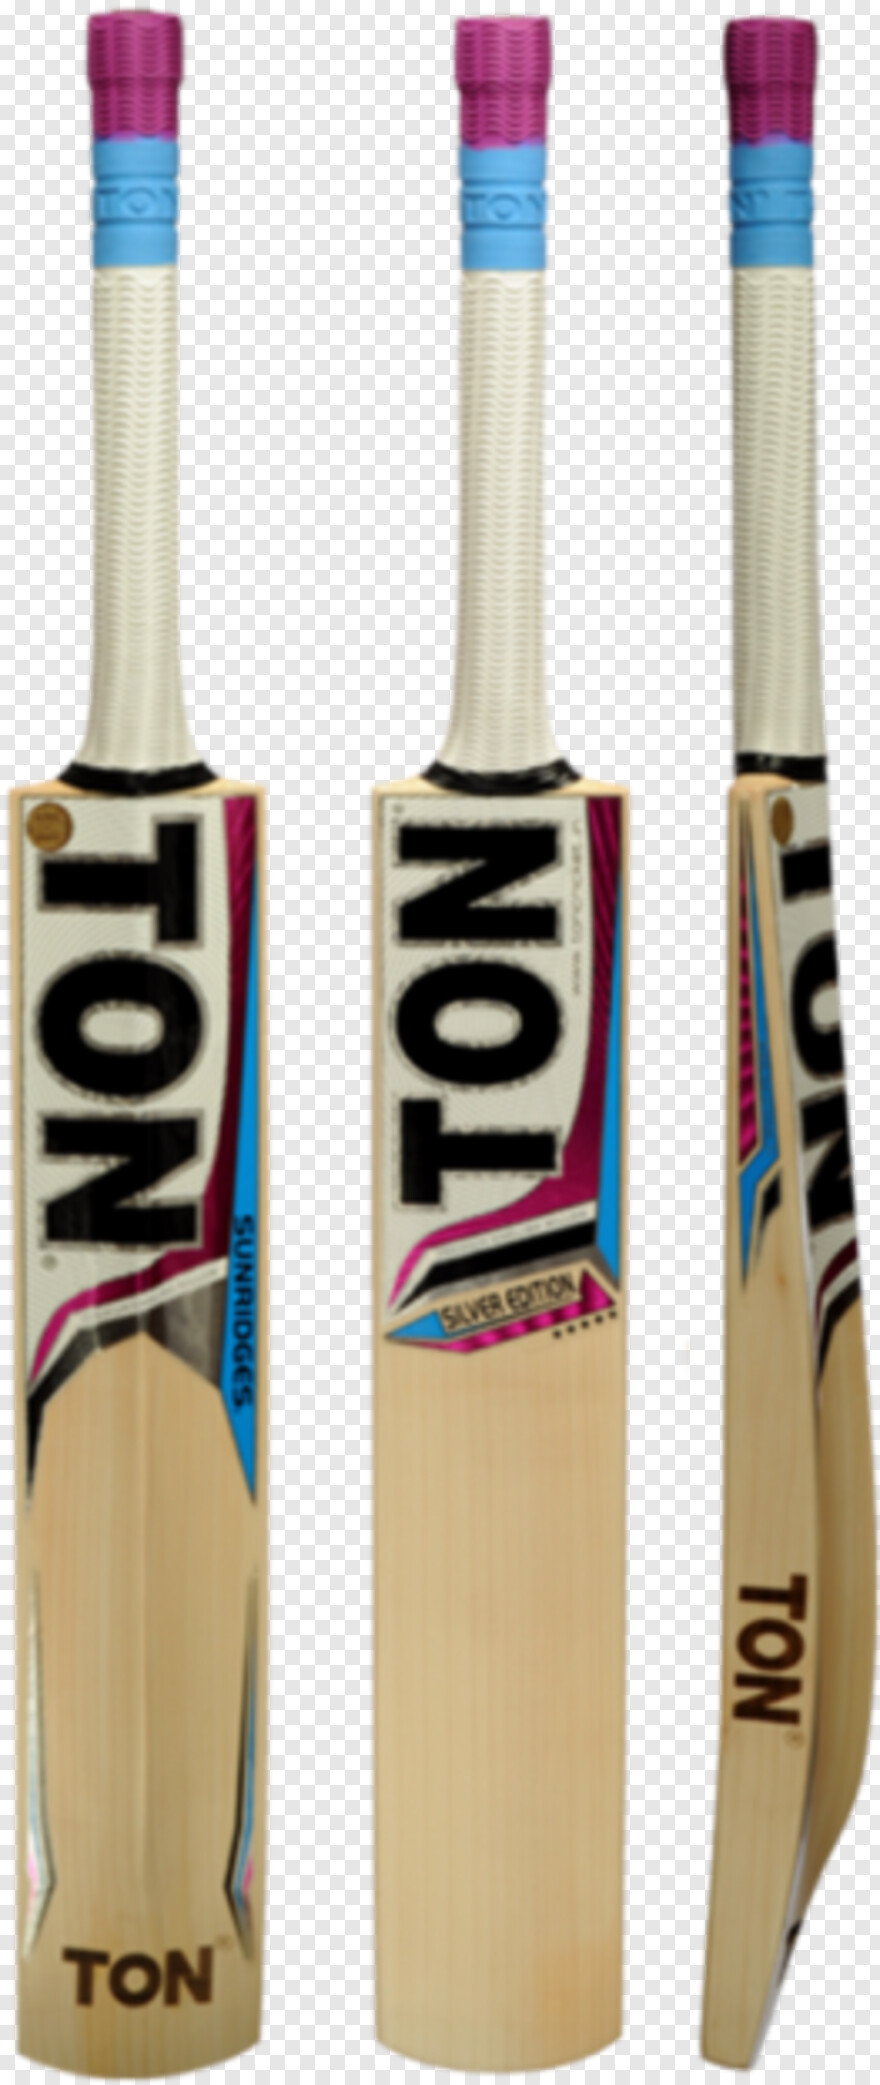  Cricket Vector, Cricket Cup, Cricket Clipart, Cricket Images, Cricket Kit, Cricket Bat And Ball